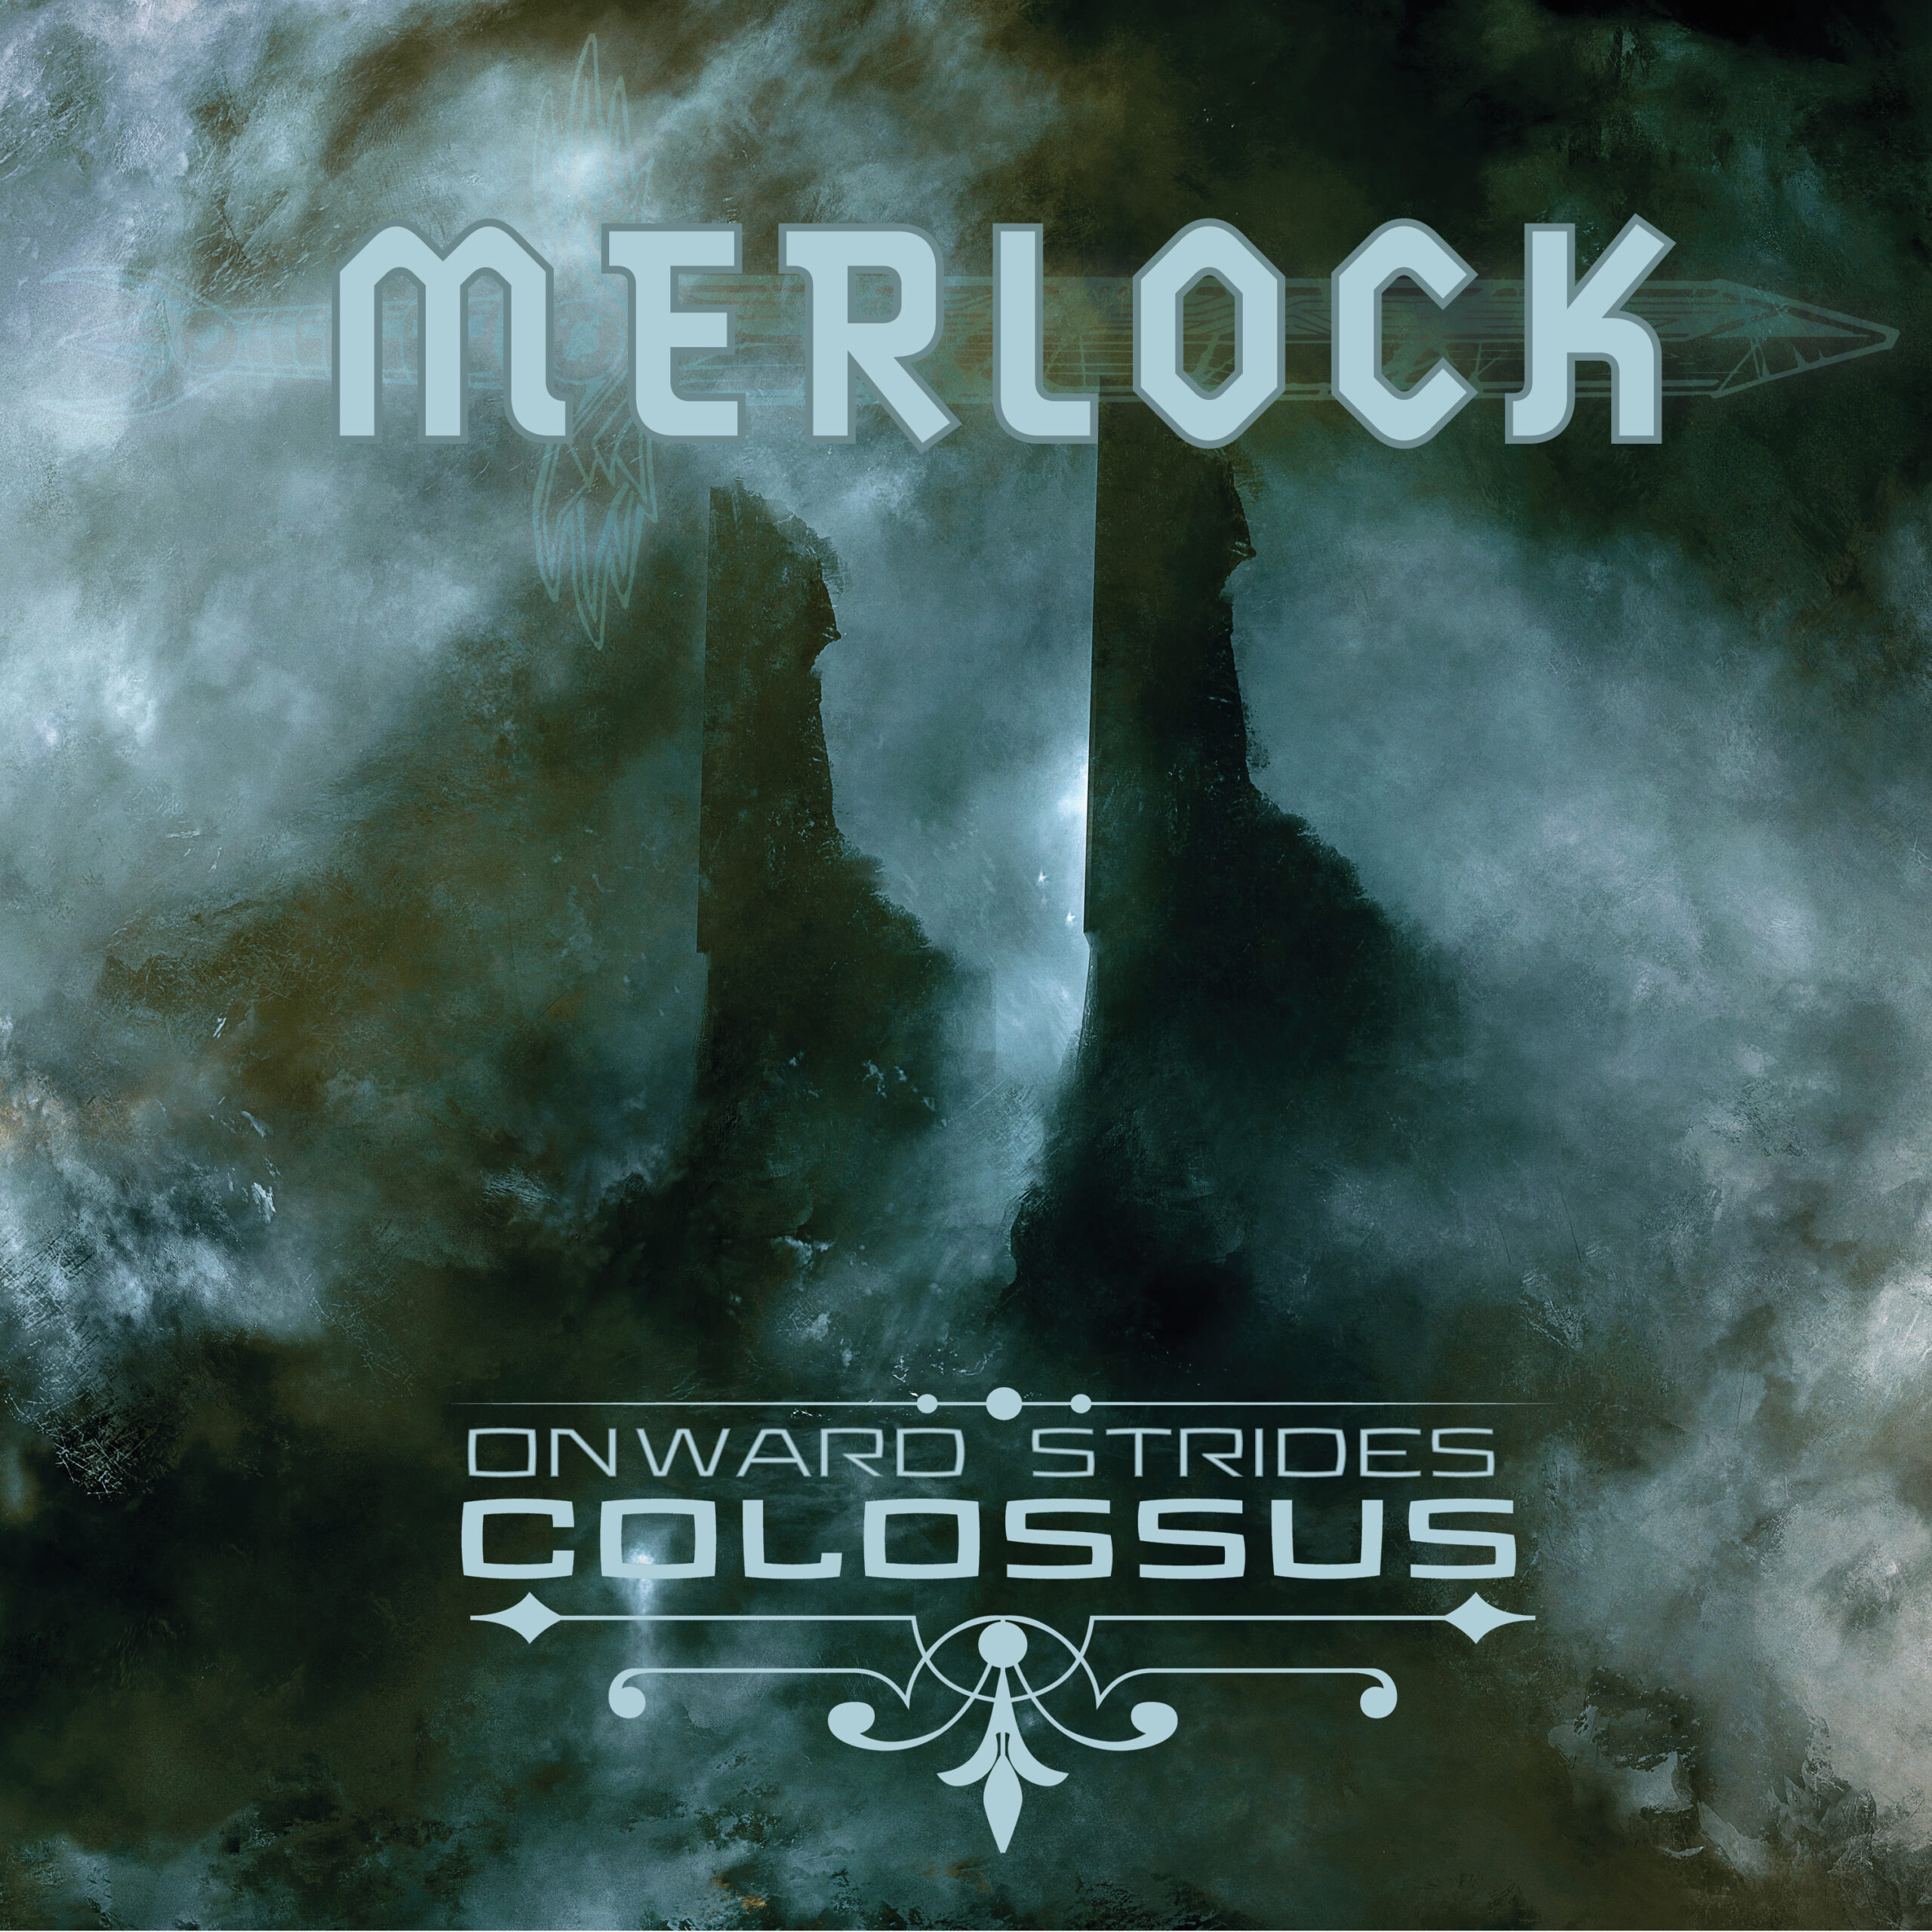 Merlock – Onward Strides Colossus Review